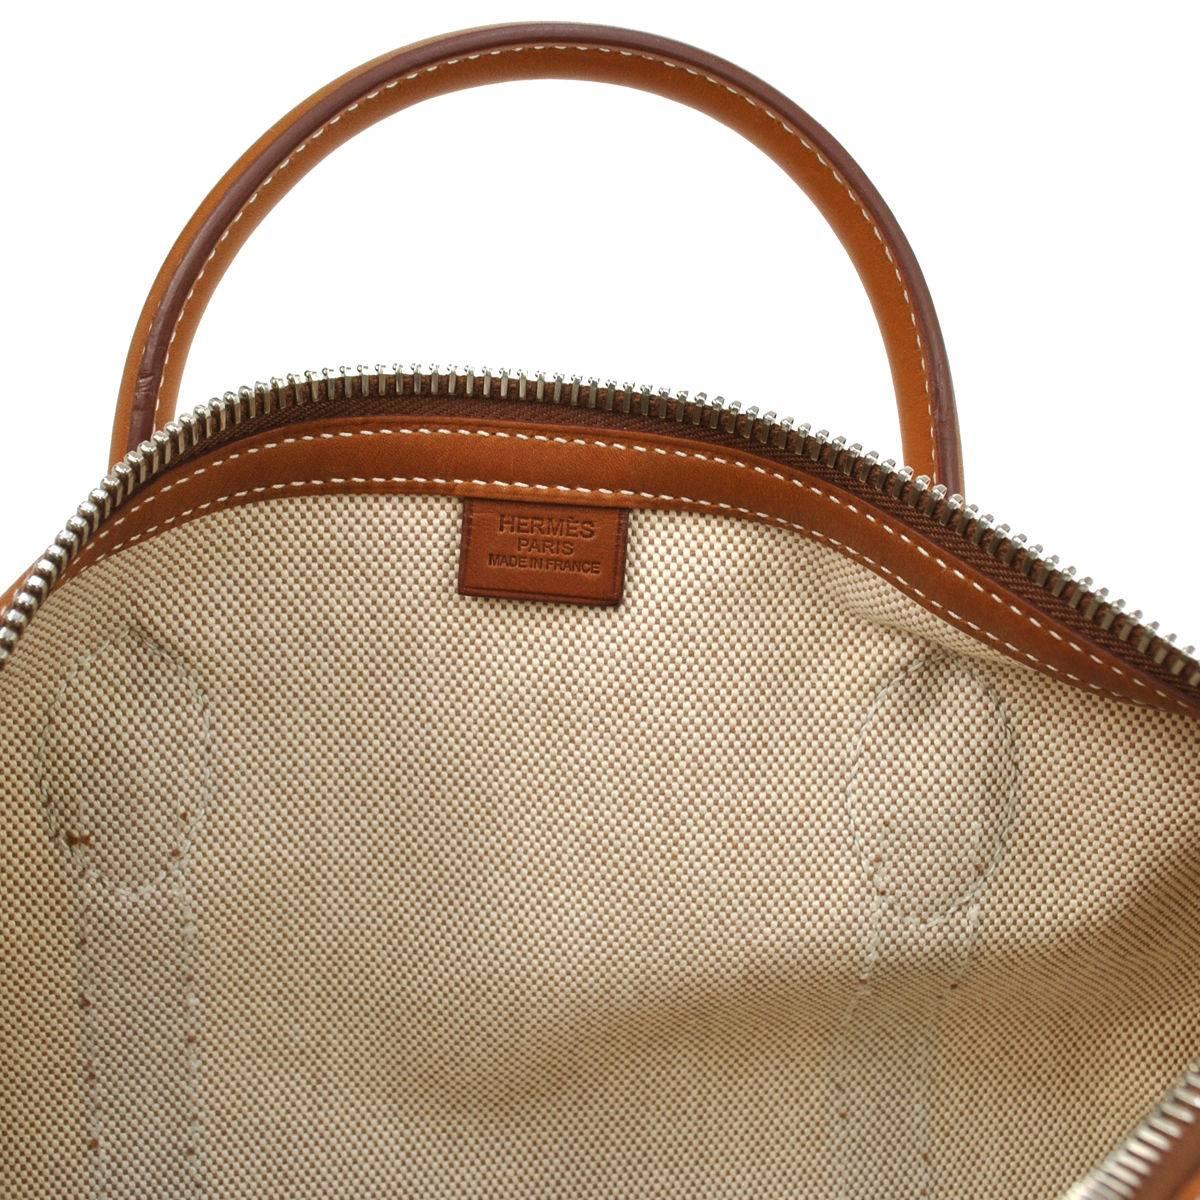 Hermes Canvas Cognac Leather Top Handle Satchel Carryall Bag 1